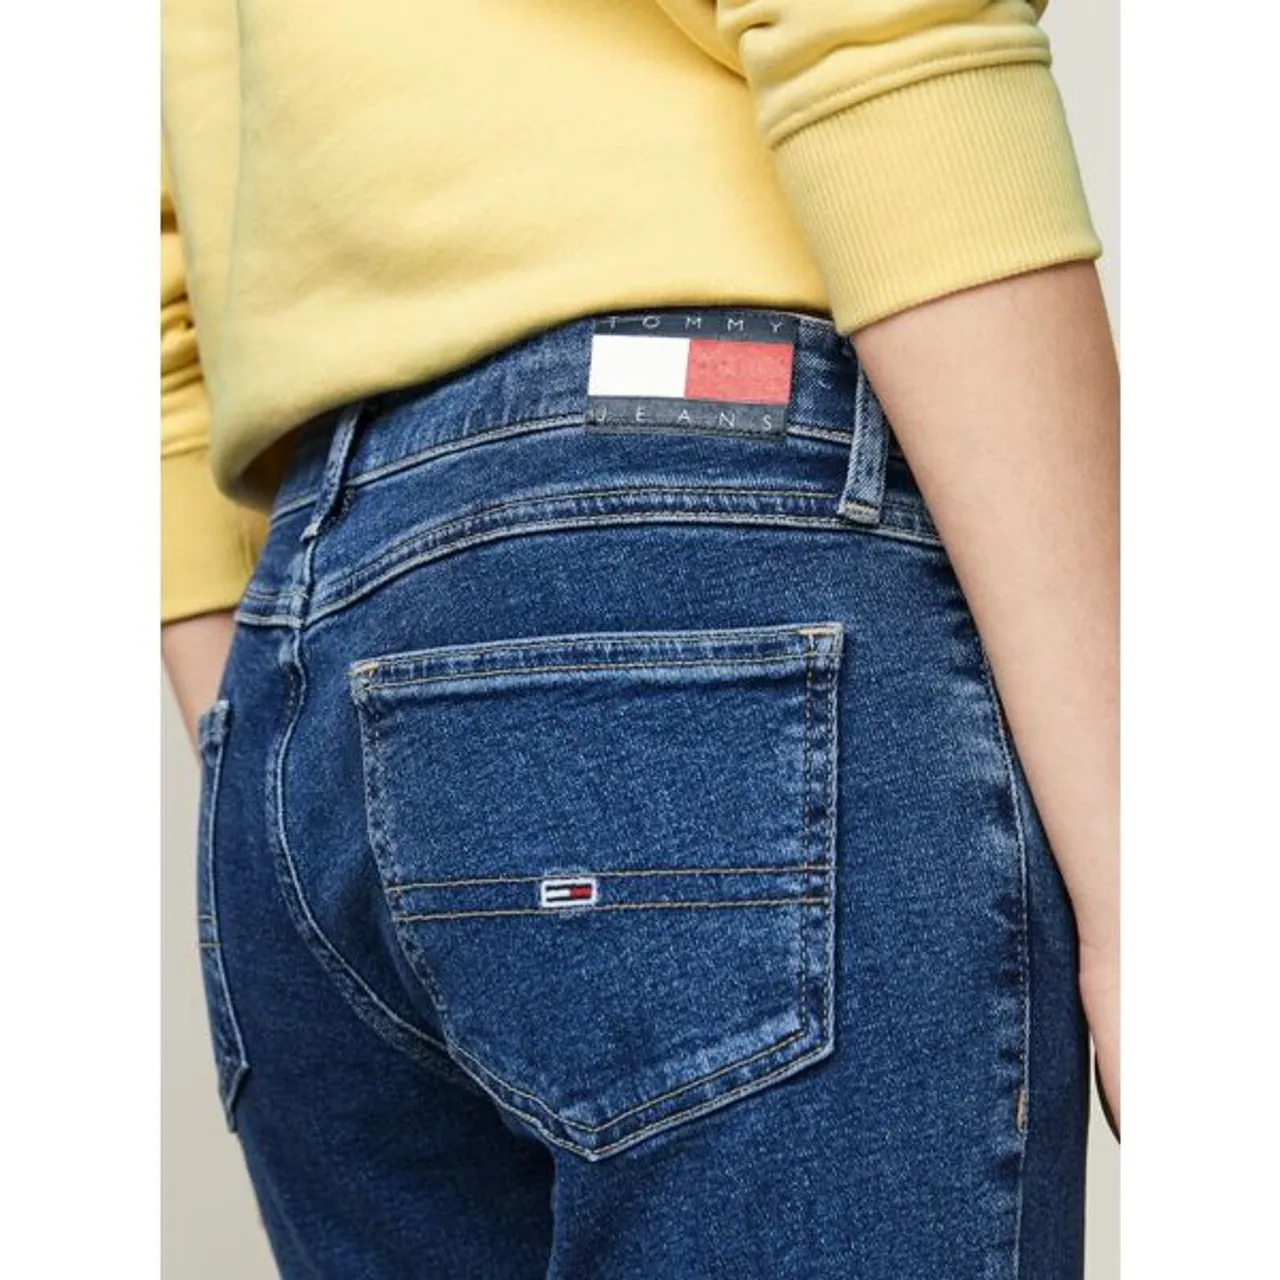 Slim-fit-Jeans TOMMY JEANS "Skinny Jeans Marken Low Waist Mittlere Leibhöhe" Gr. 29, Länge 30, blau (denim medium3) Damen Jeans Röhrenjeans mit Faded-...